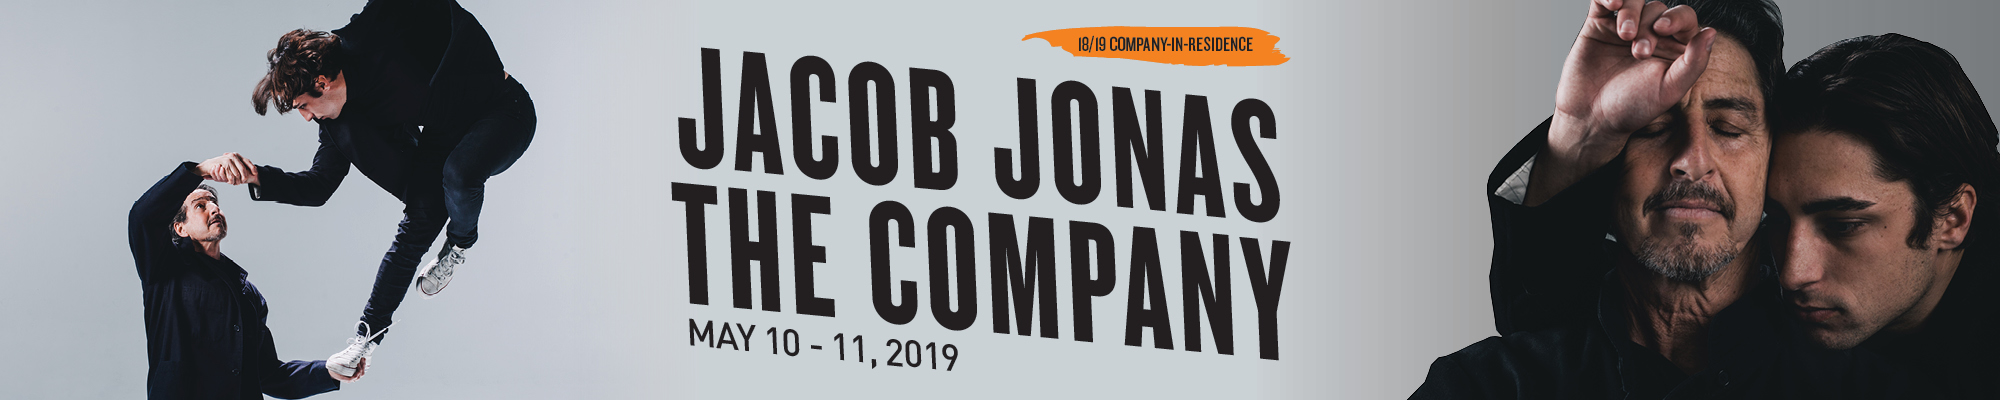 JACOB JONAS THE COMPANY 2019